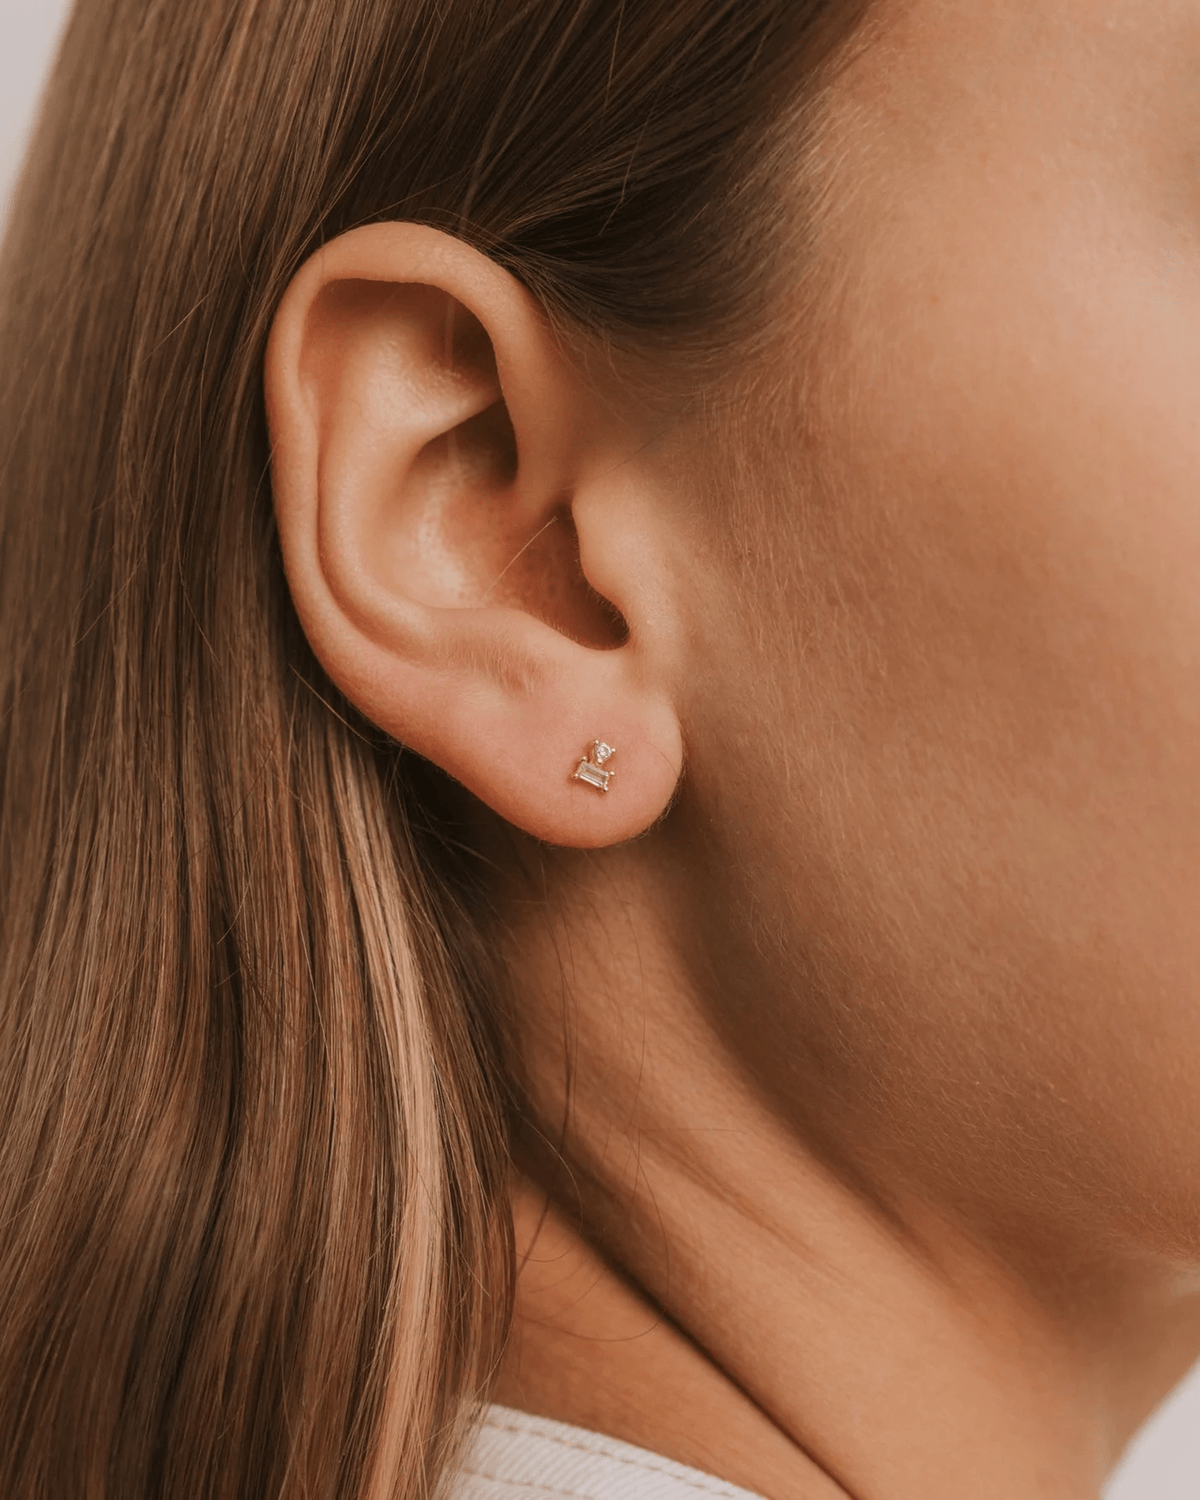 JaxKelly Jewelry Crystal Socialite Double Stud Stack Earrings